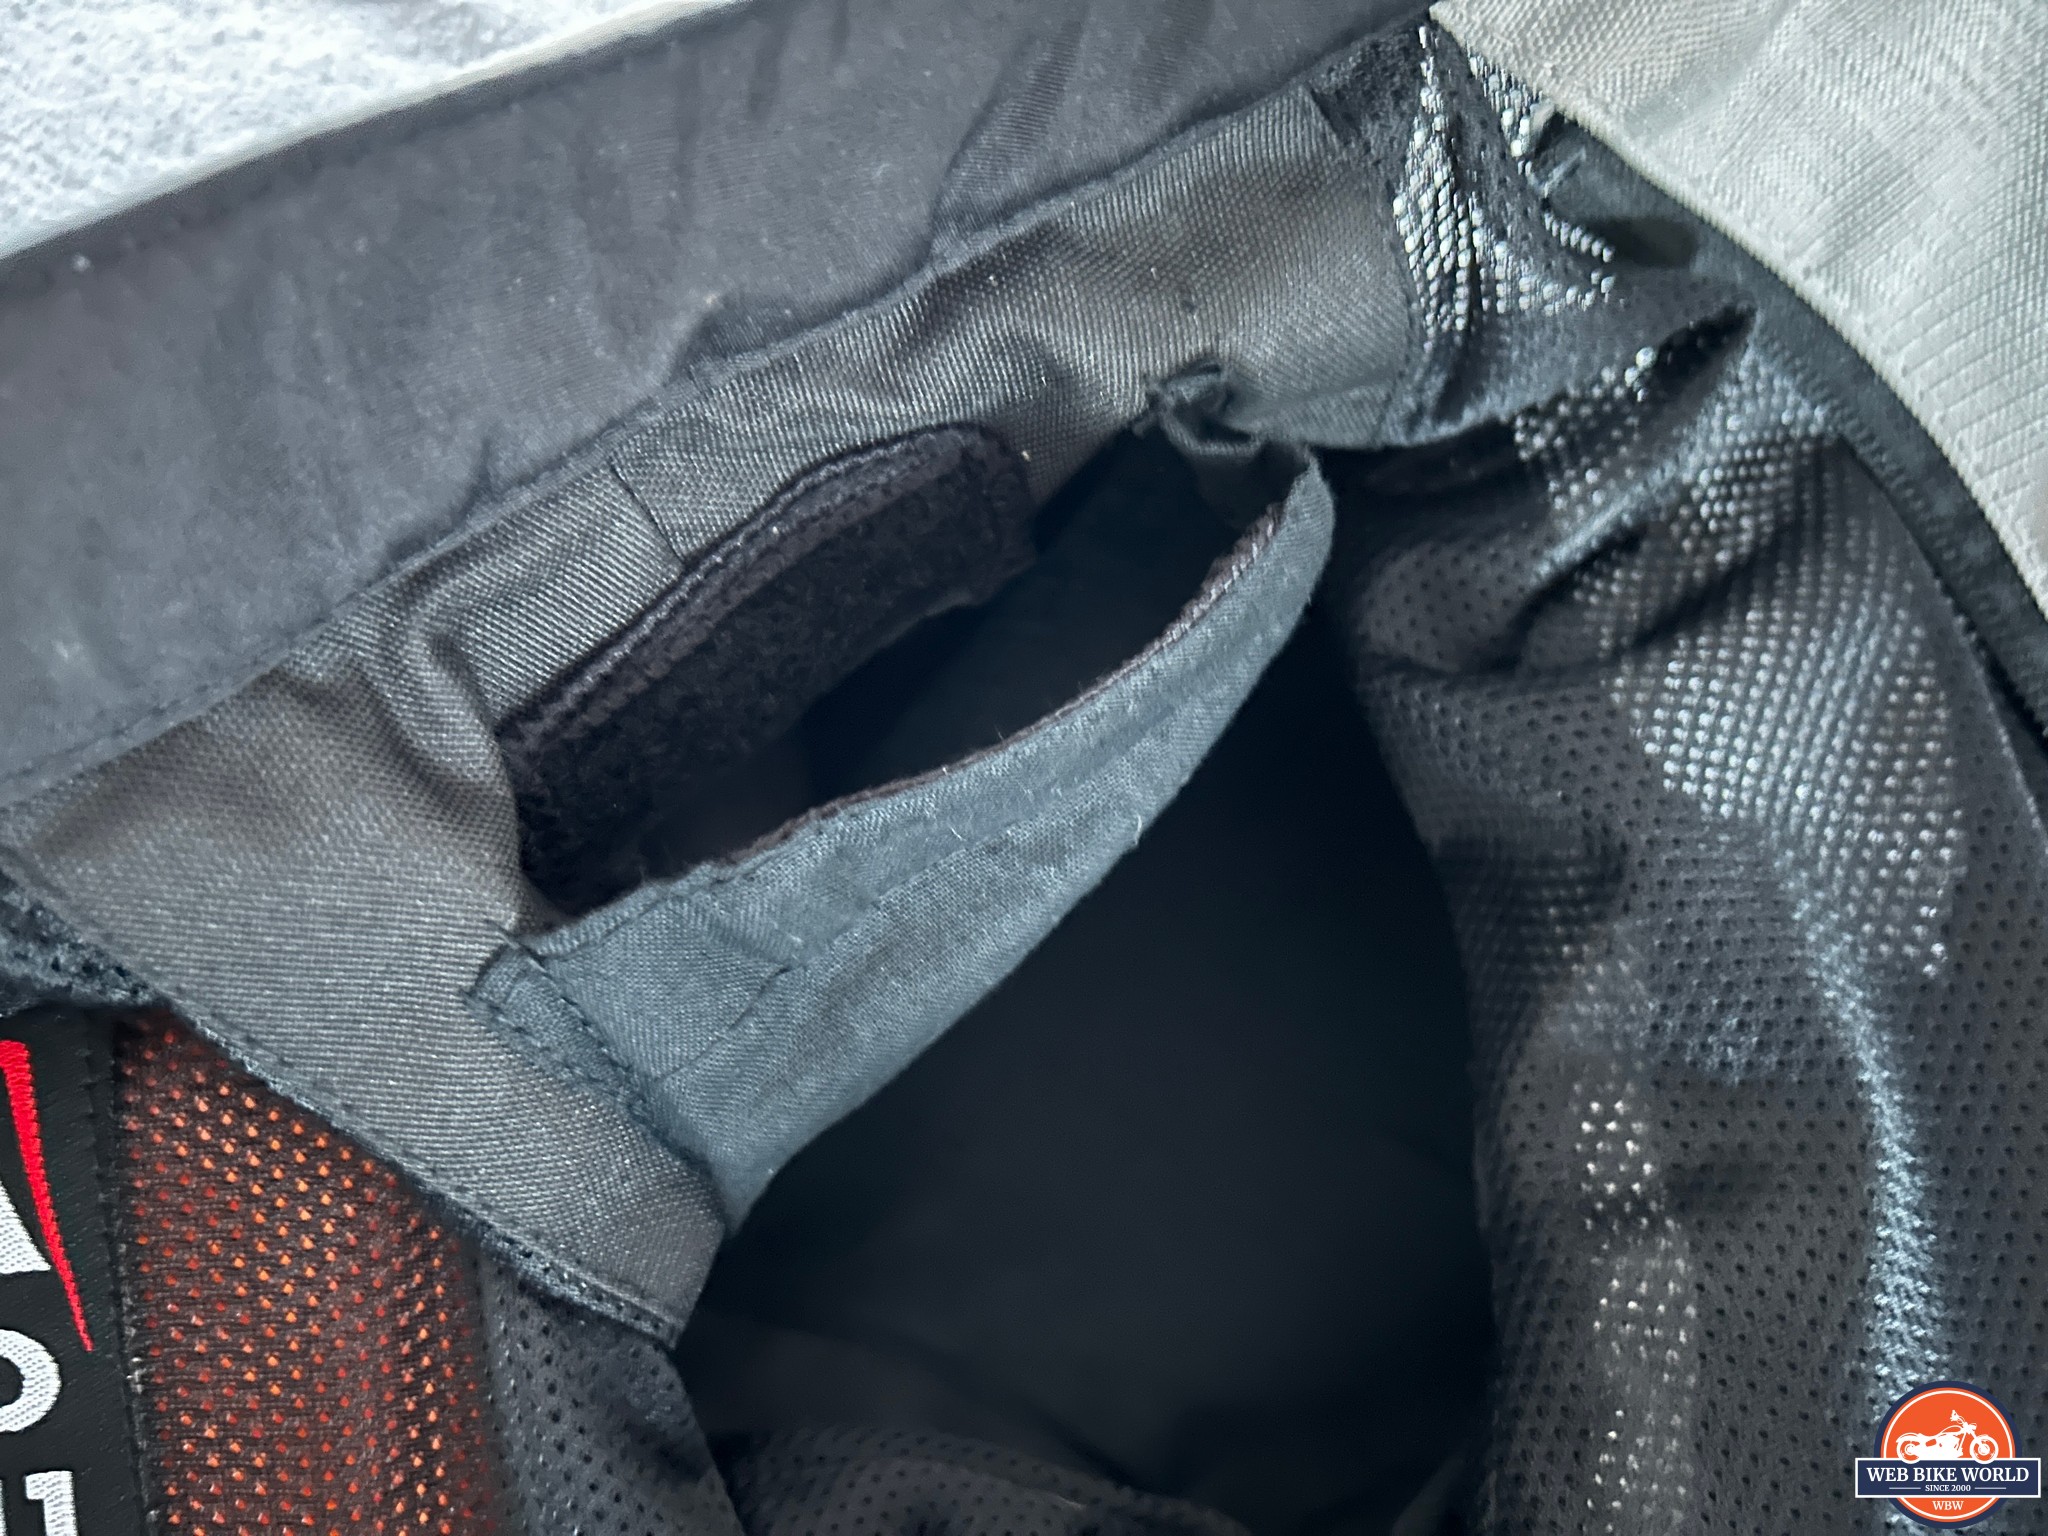 Closeup of the shoulder armor pocket